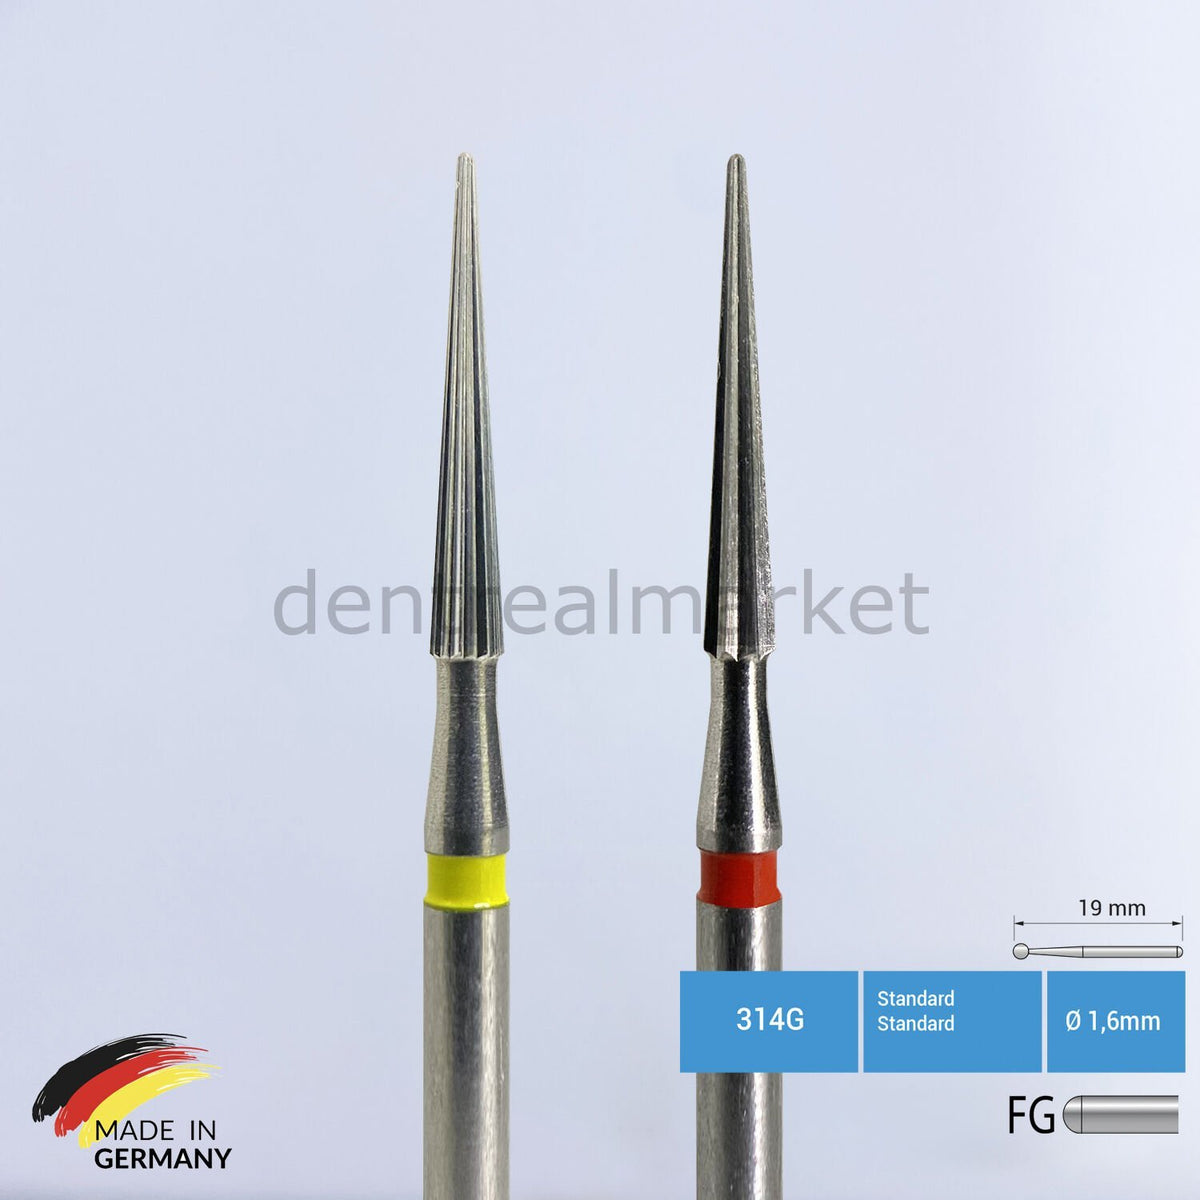 DentrealStore - Frank Dental Tungsten Carbide Trimming & Finishing Bur - C.135 - For Air Turbine